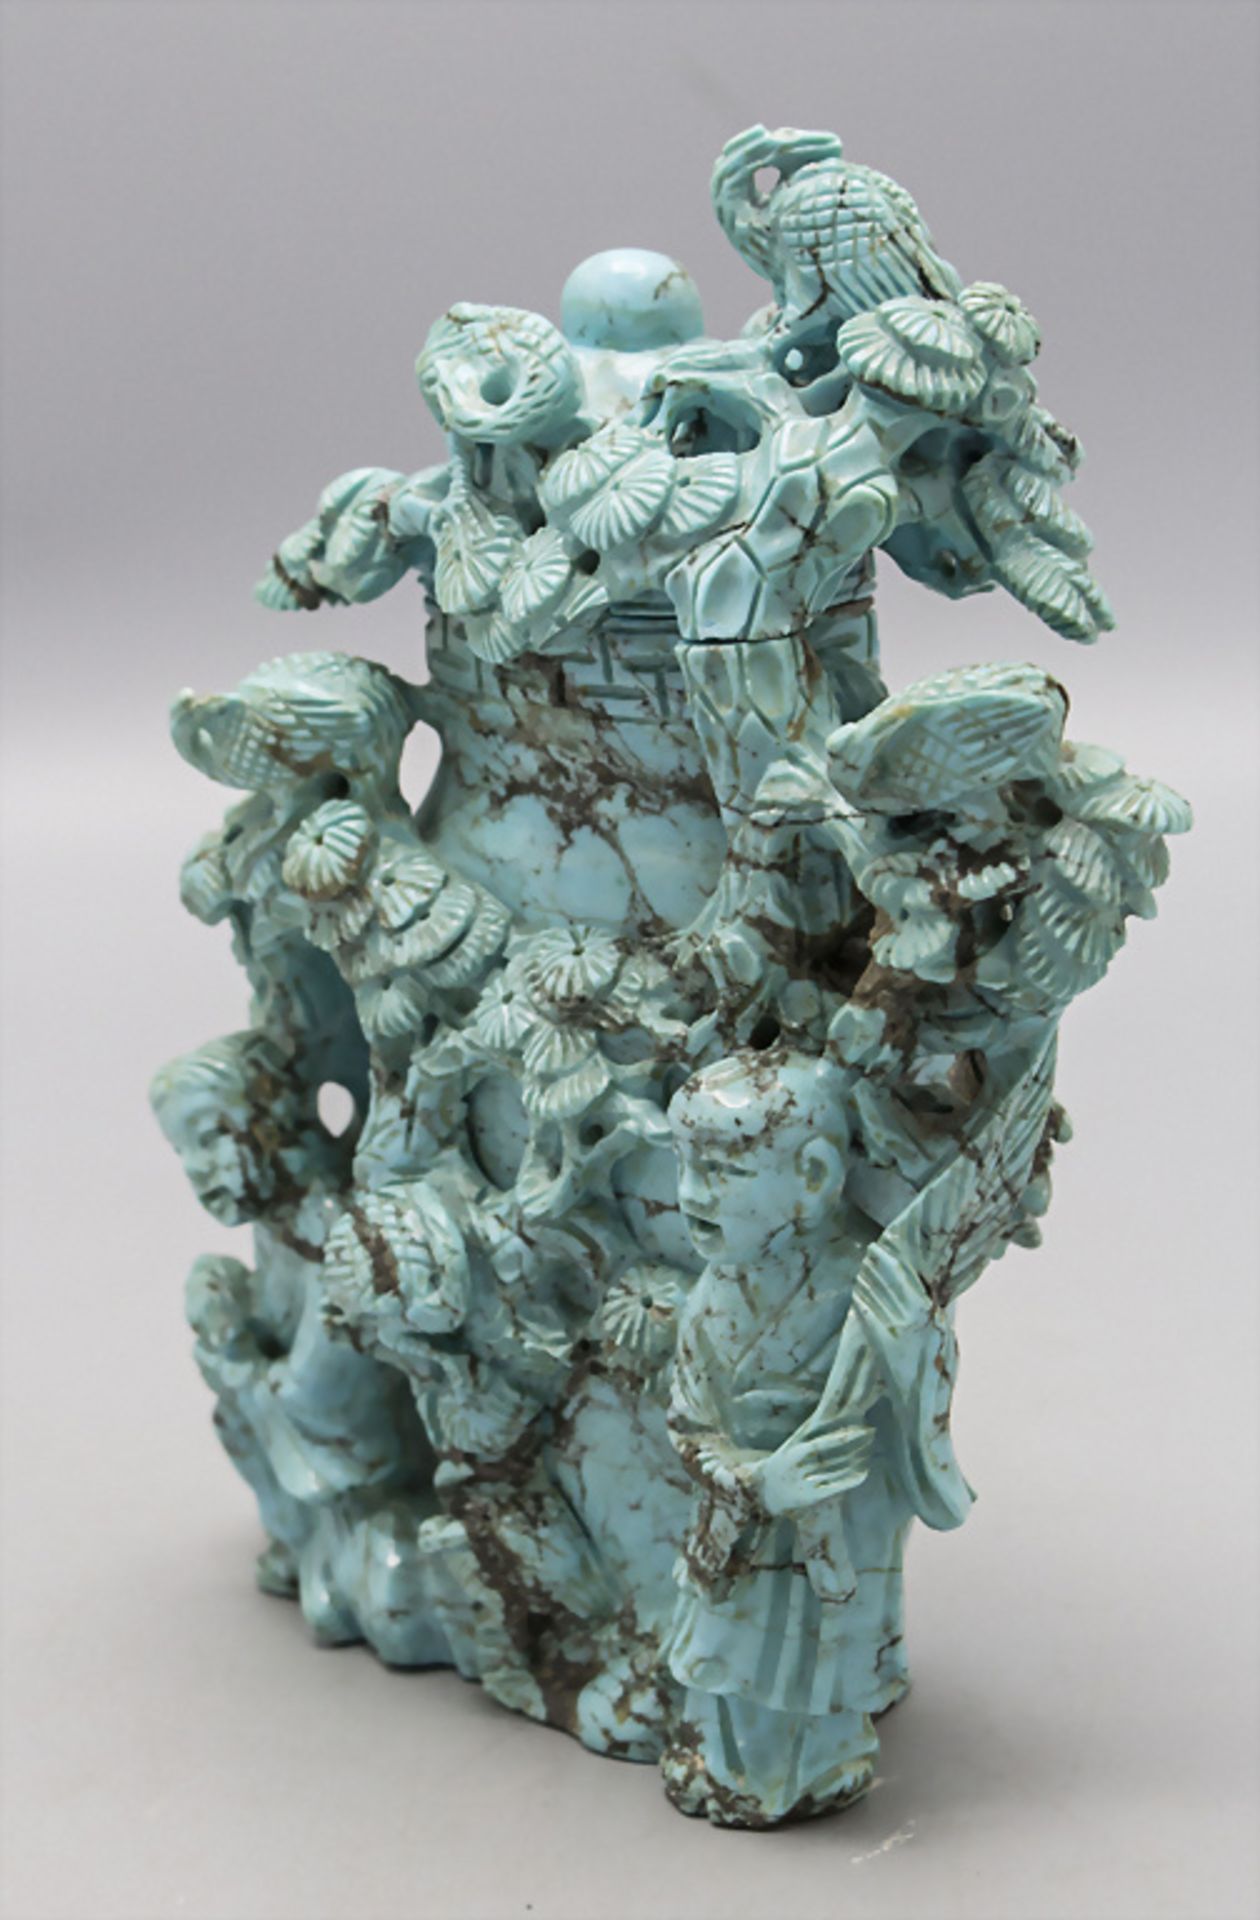 Türkis-Deckelvase / A turquoise lidded vase, China, späte Qing-Dynastie (1644-1911) - Bild 2 aus 7